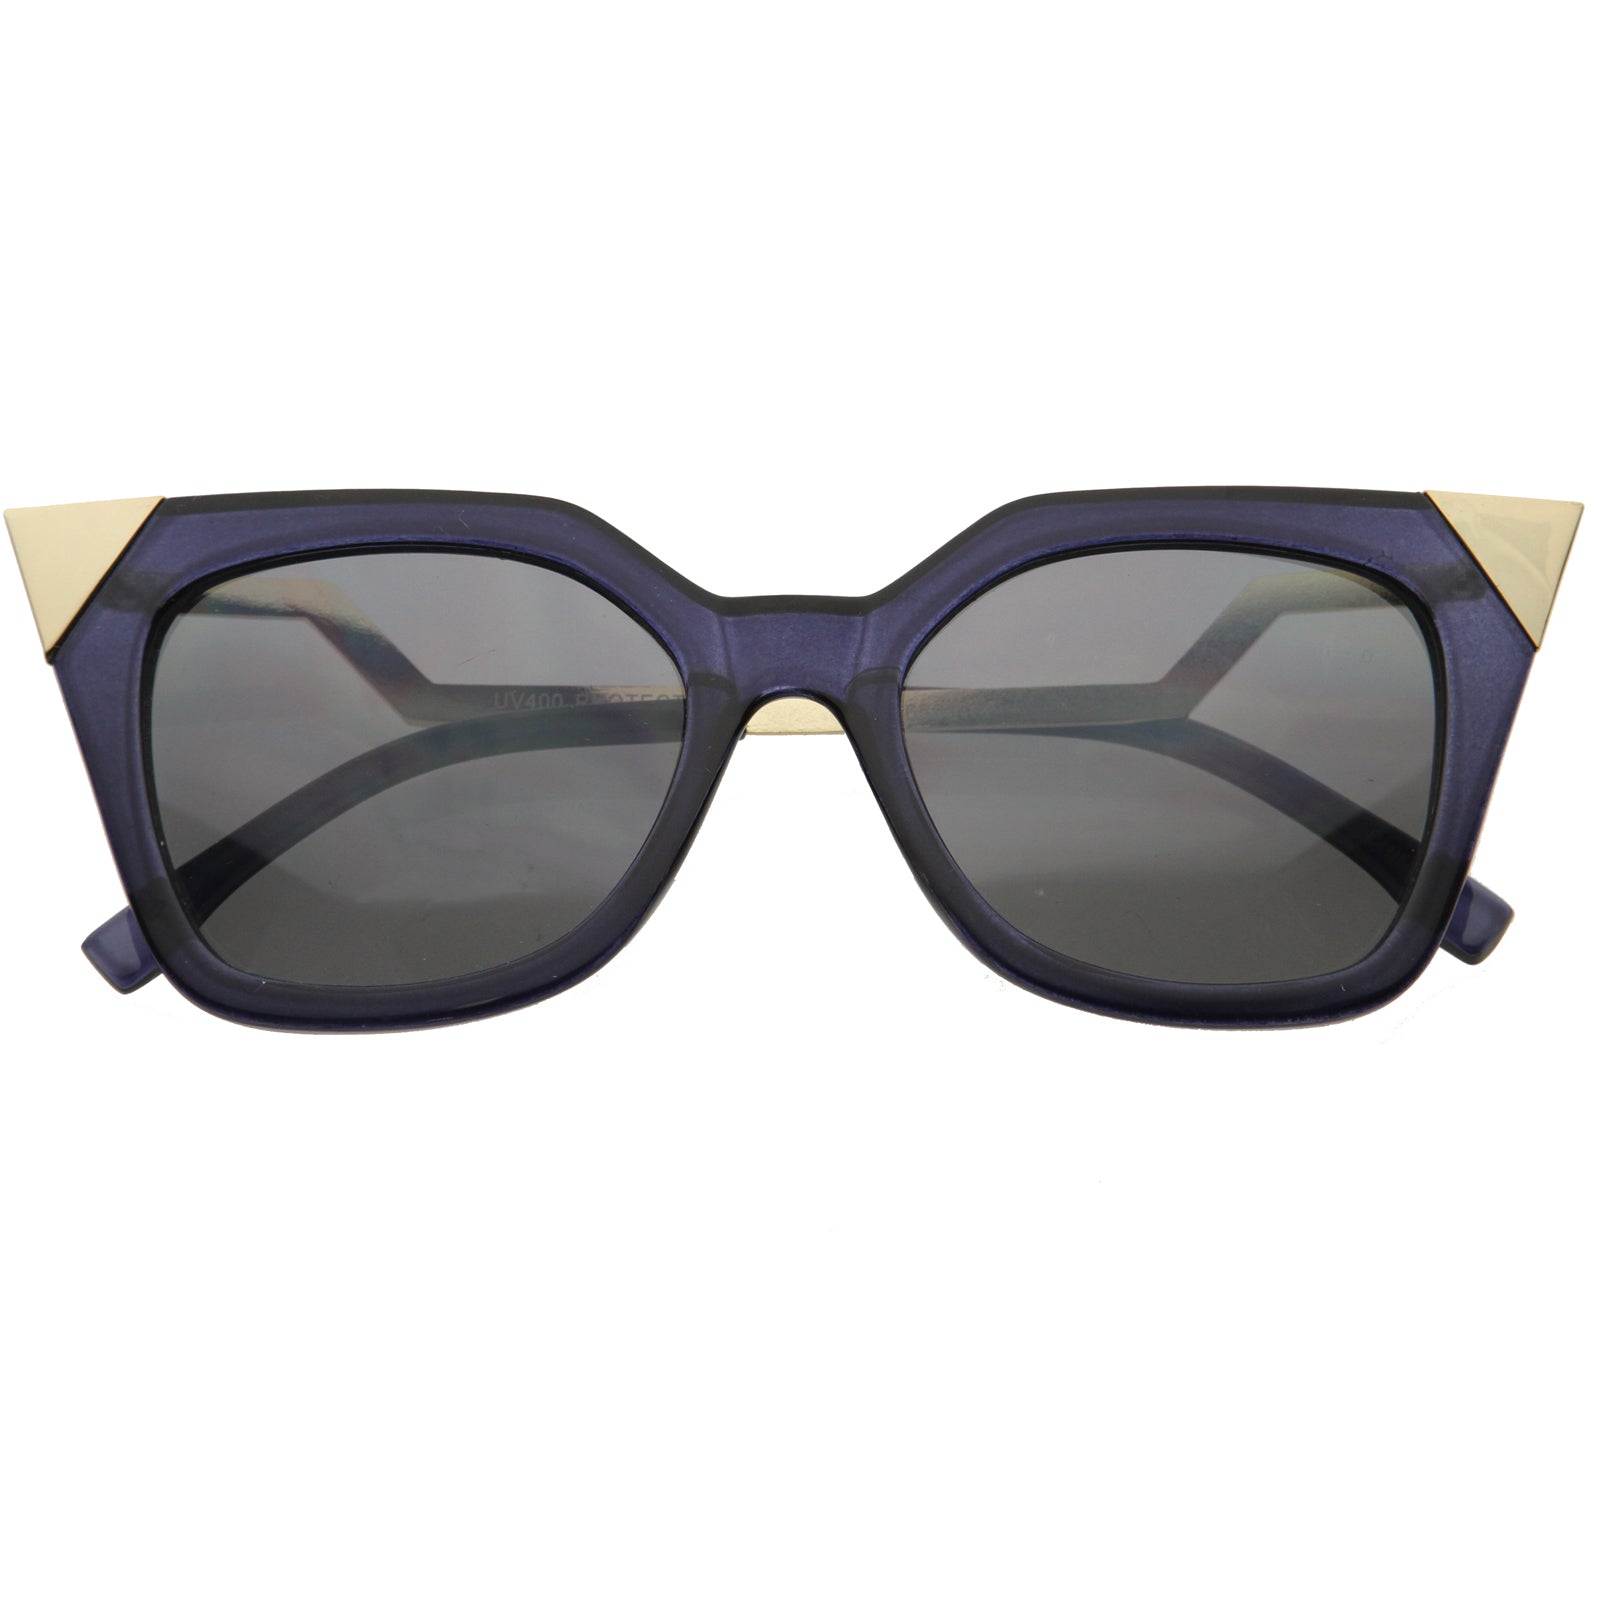 Fendi - Iridia Cat-eye Gold-tone And Acetate Sunglasses - Black